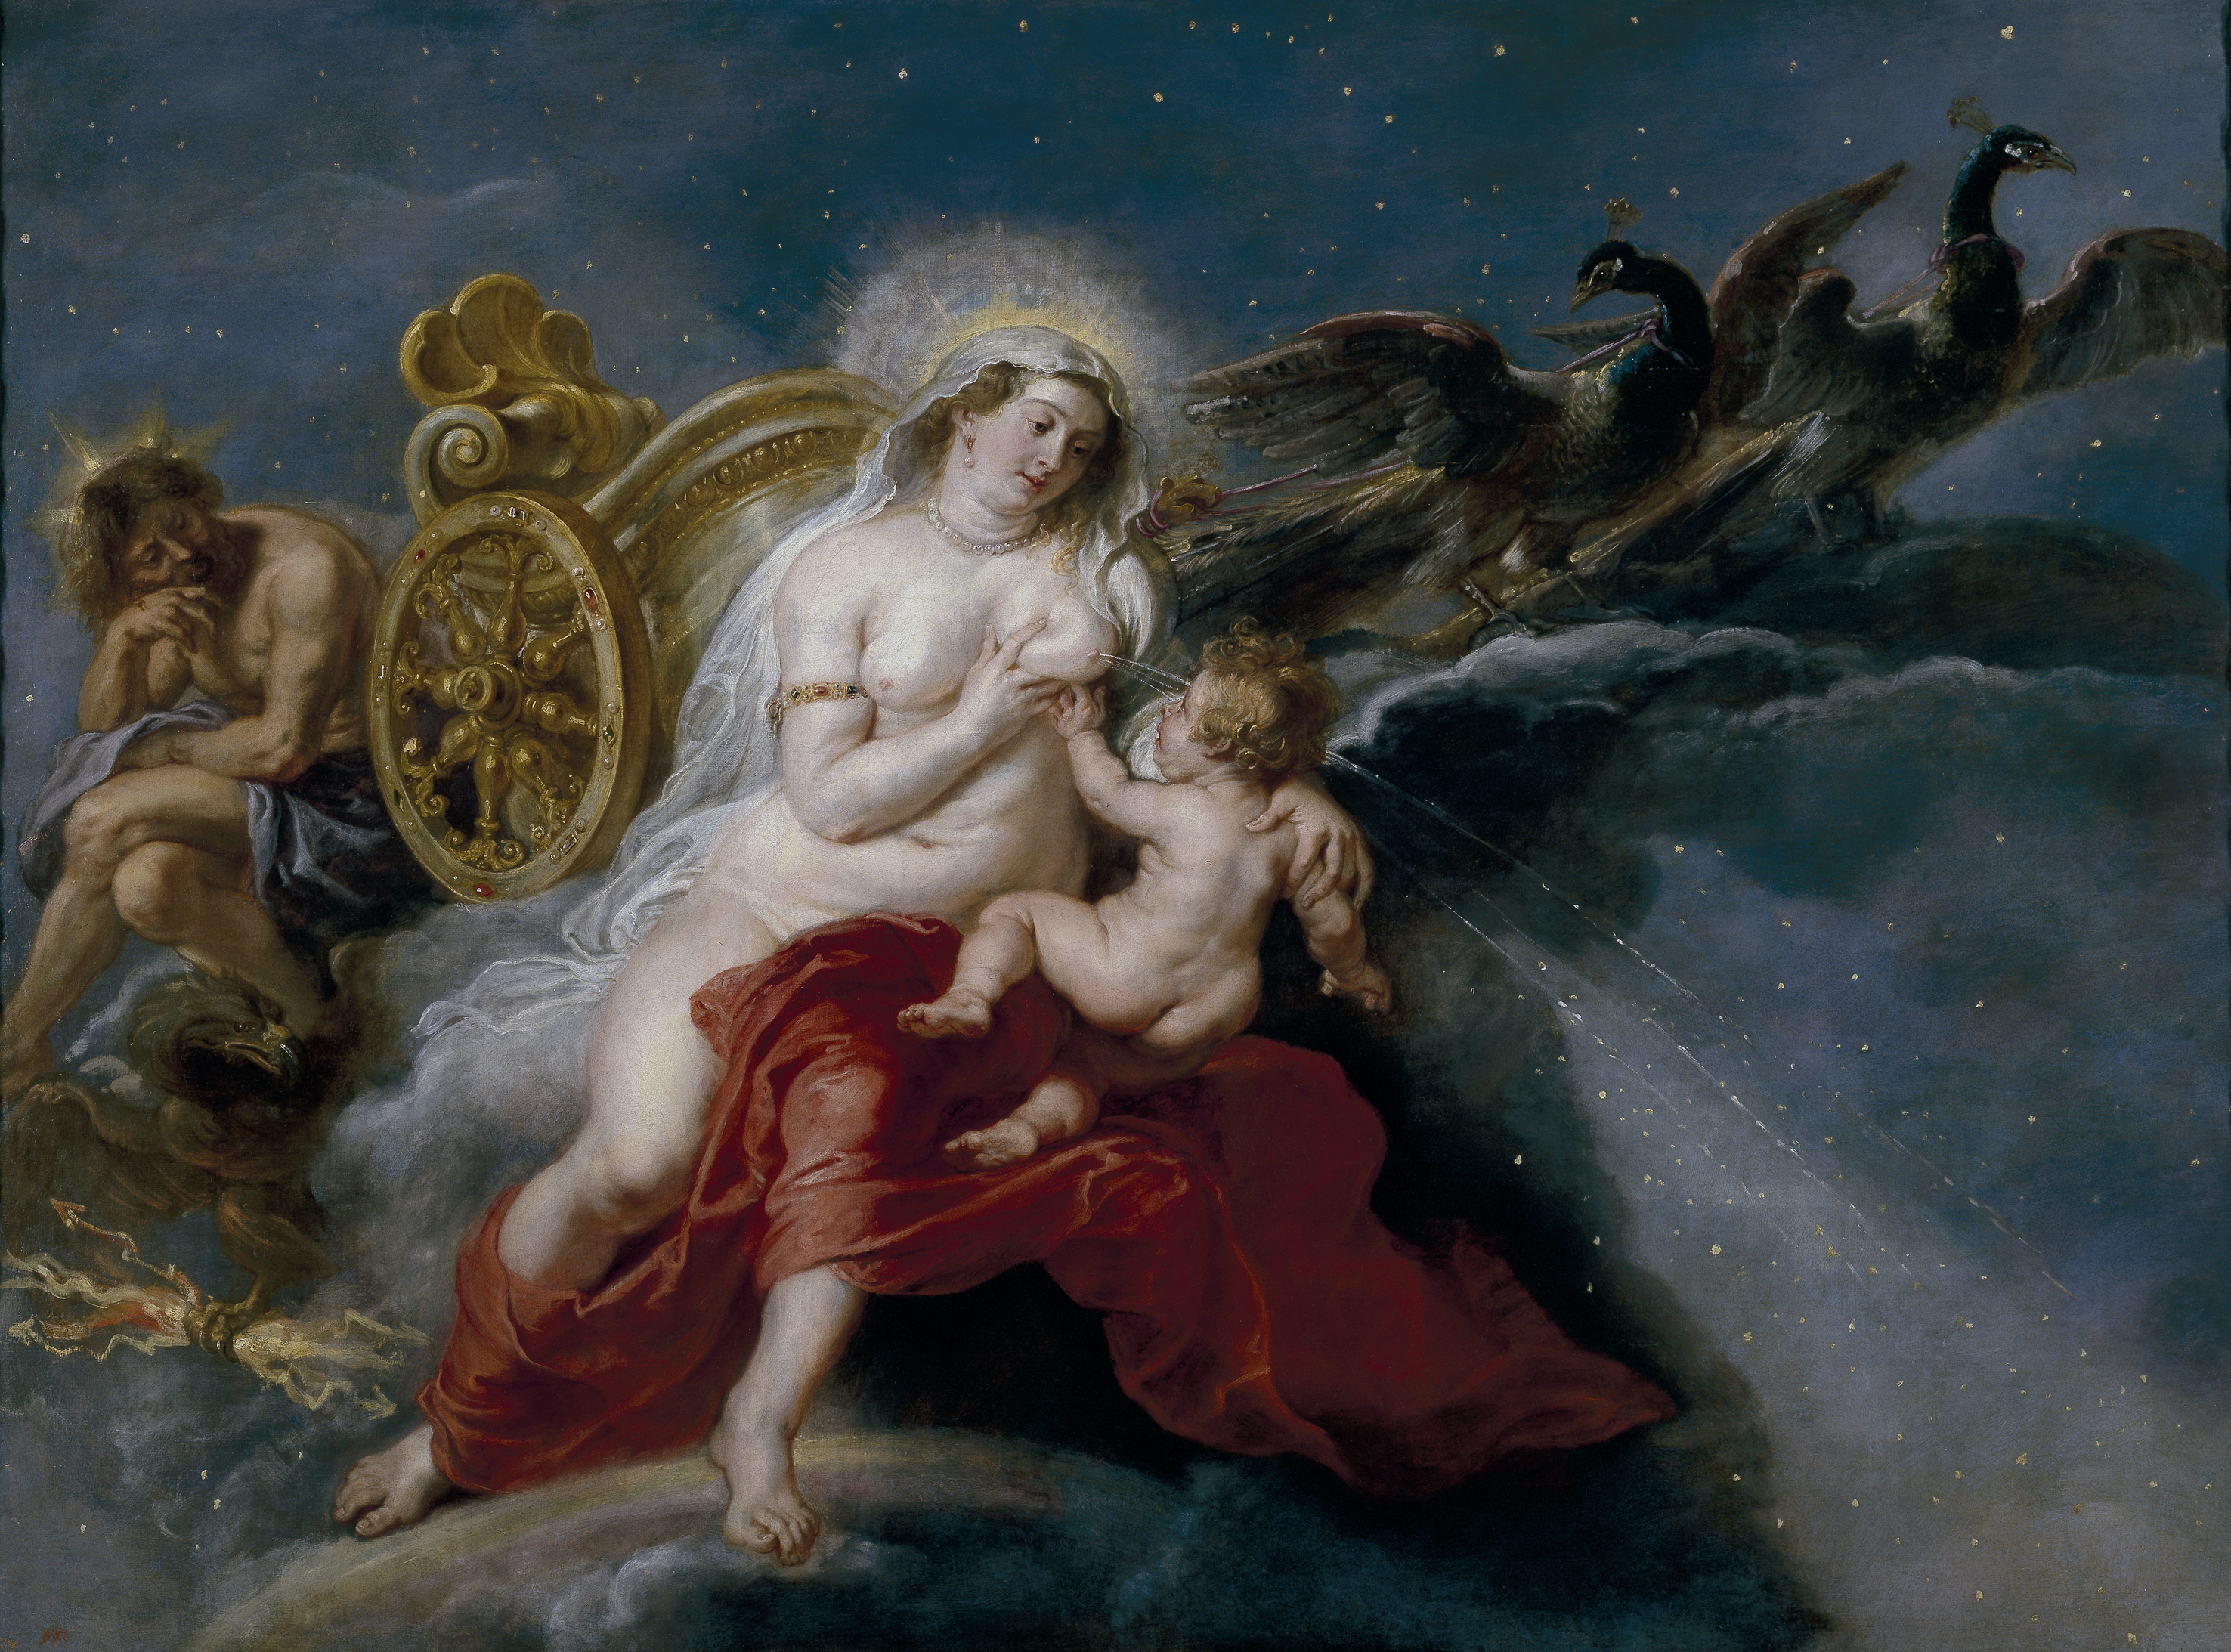 L’origine della Via Lattea by Peter Paul Rubens - 1637 ca. - 181 x 244 cm 